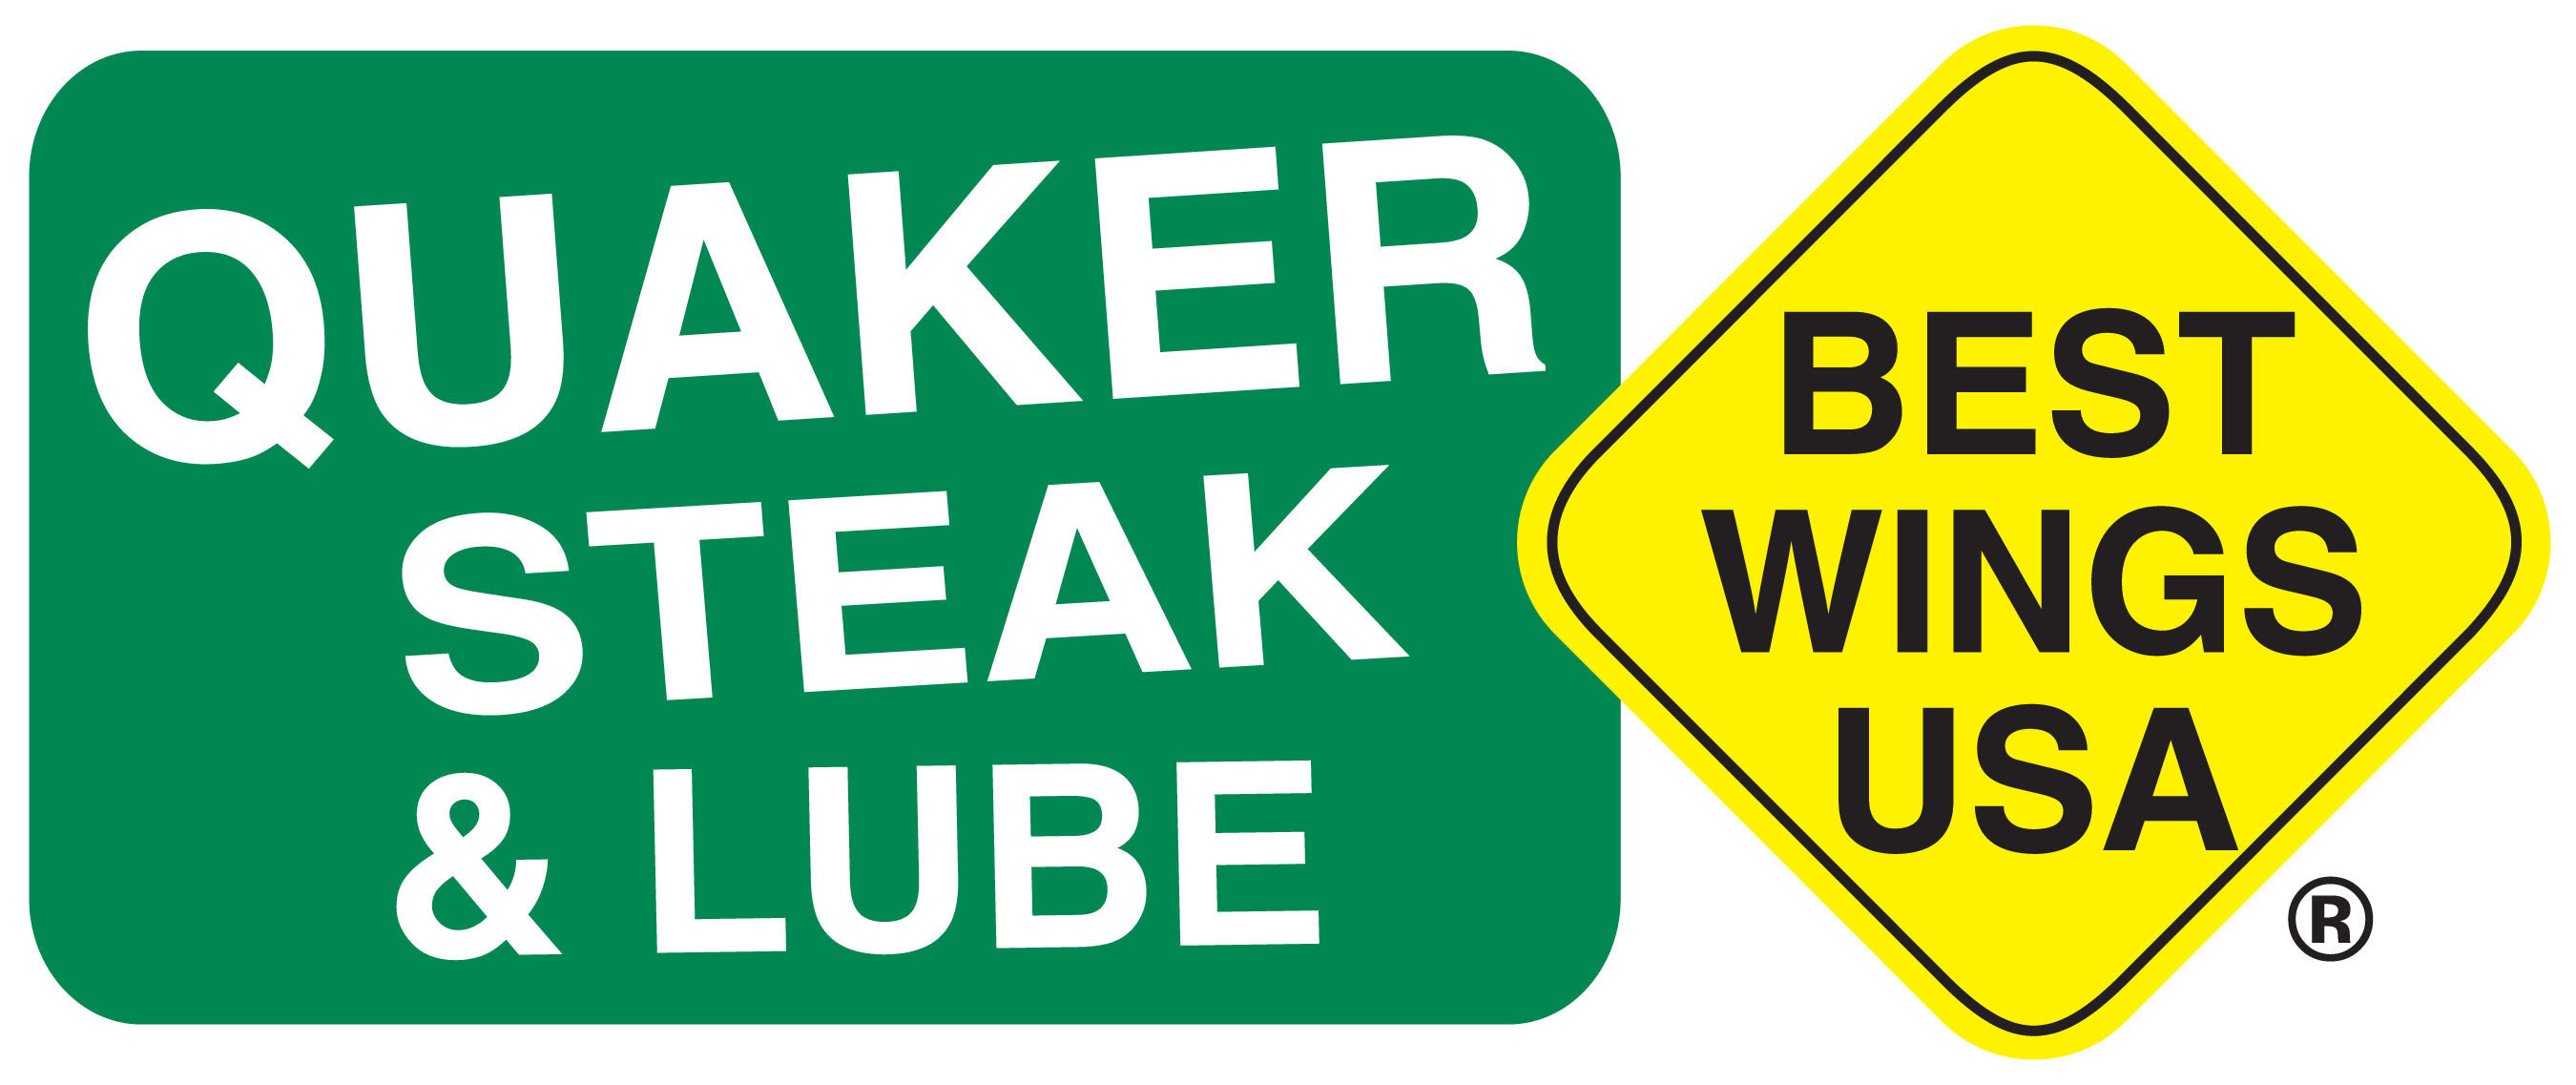 Quaker Steak & Lube company logo